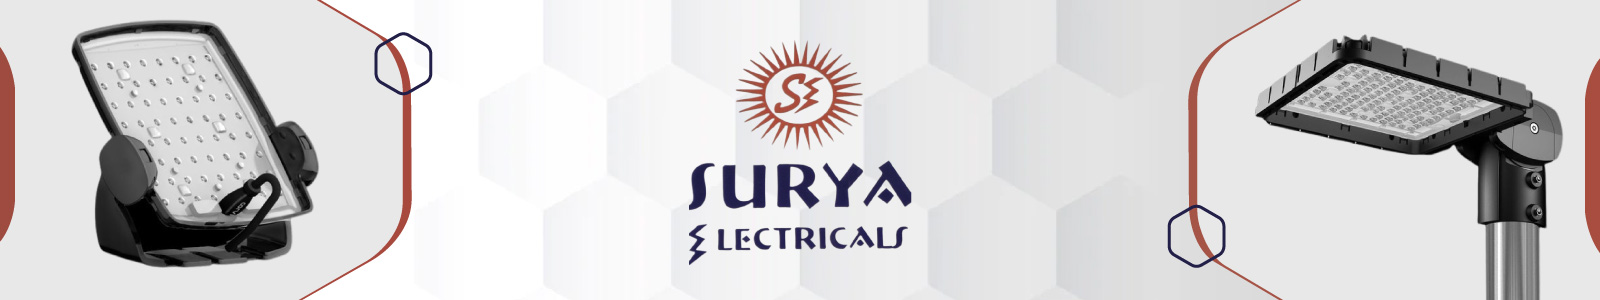 Surya Electricals